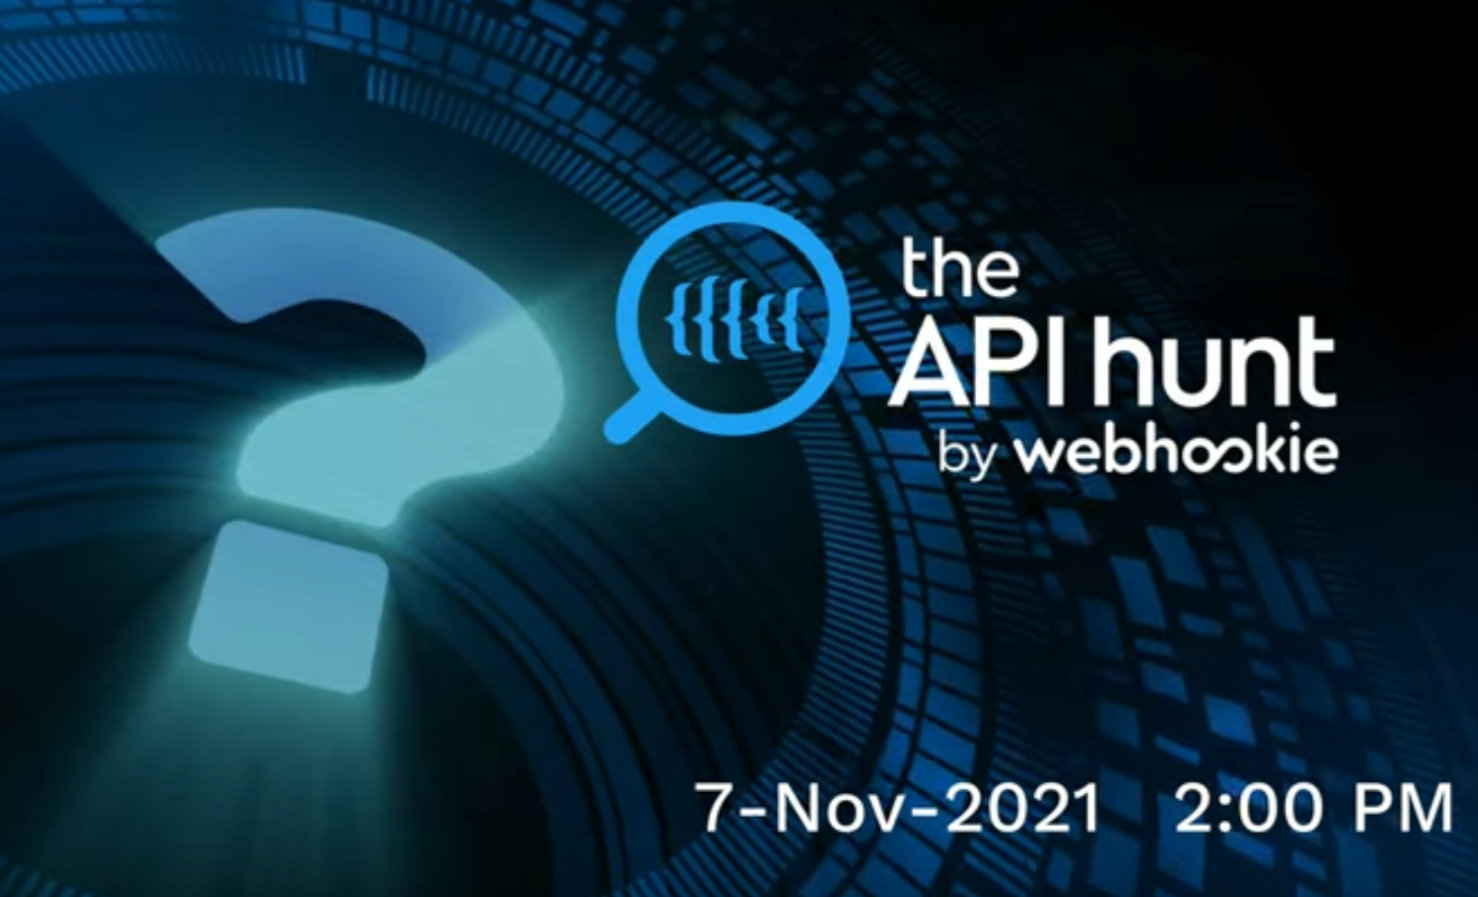 API hunt logo and clouds